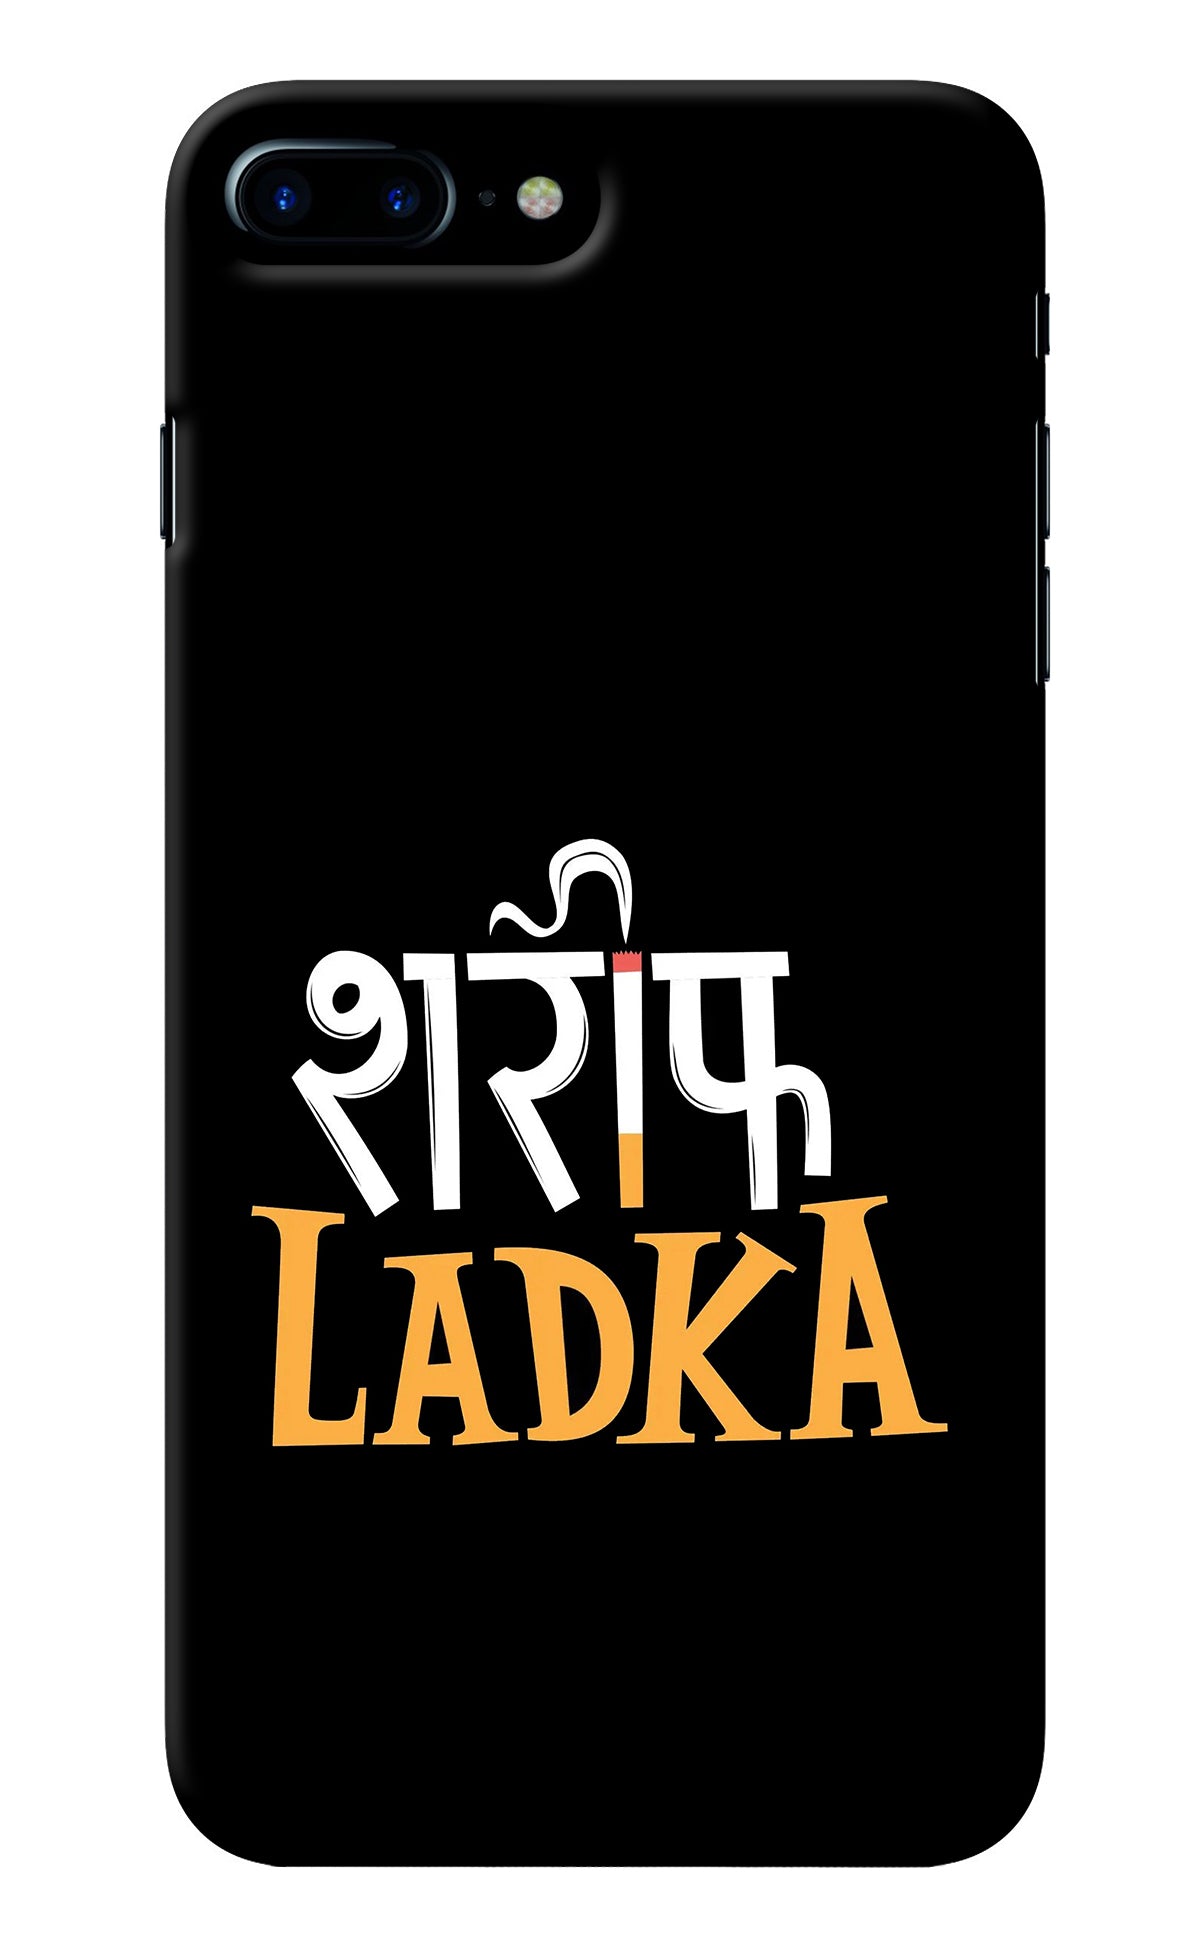 Shareef Ladka iPhone 7 Plus Back Cover